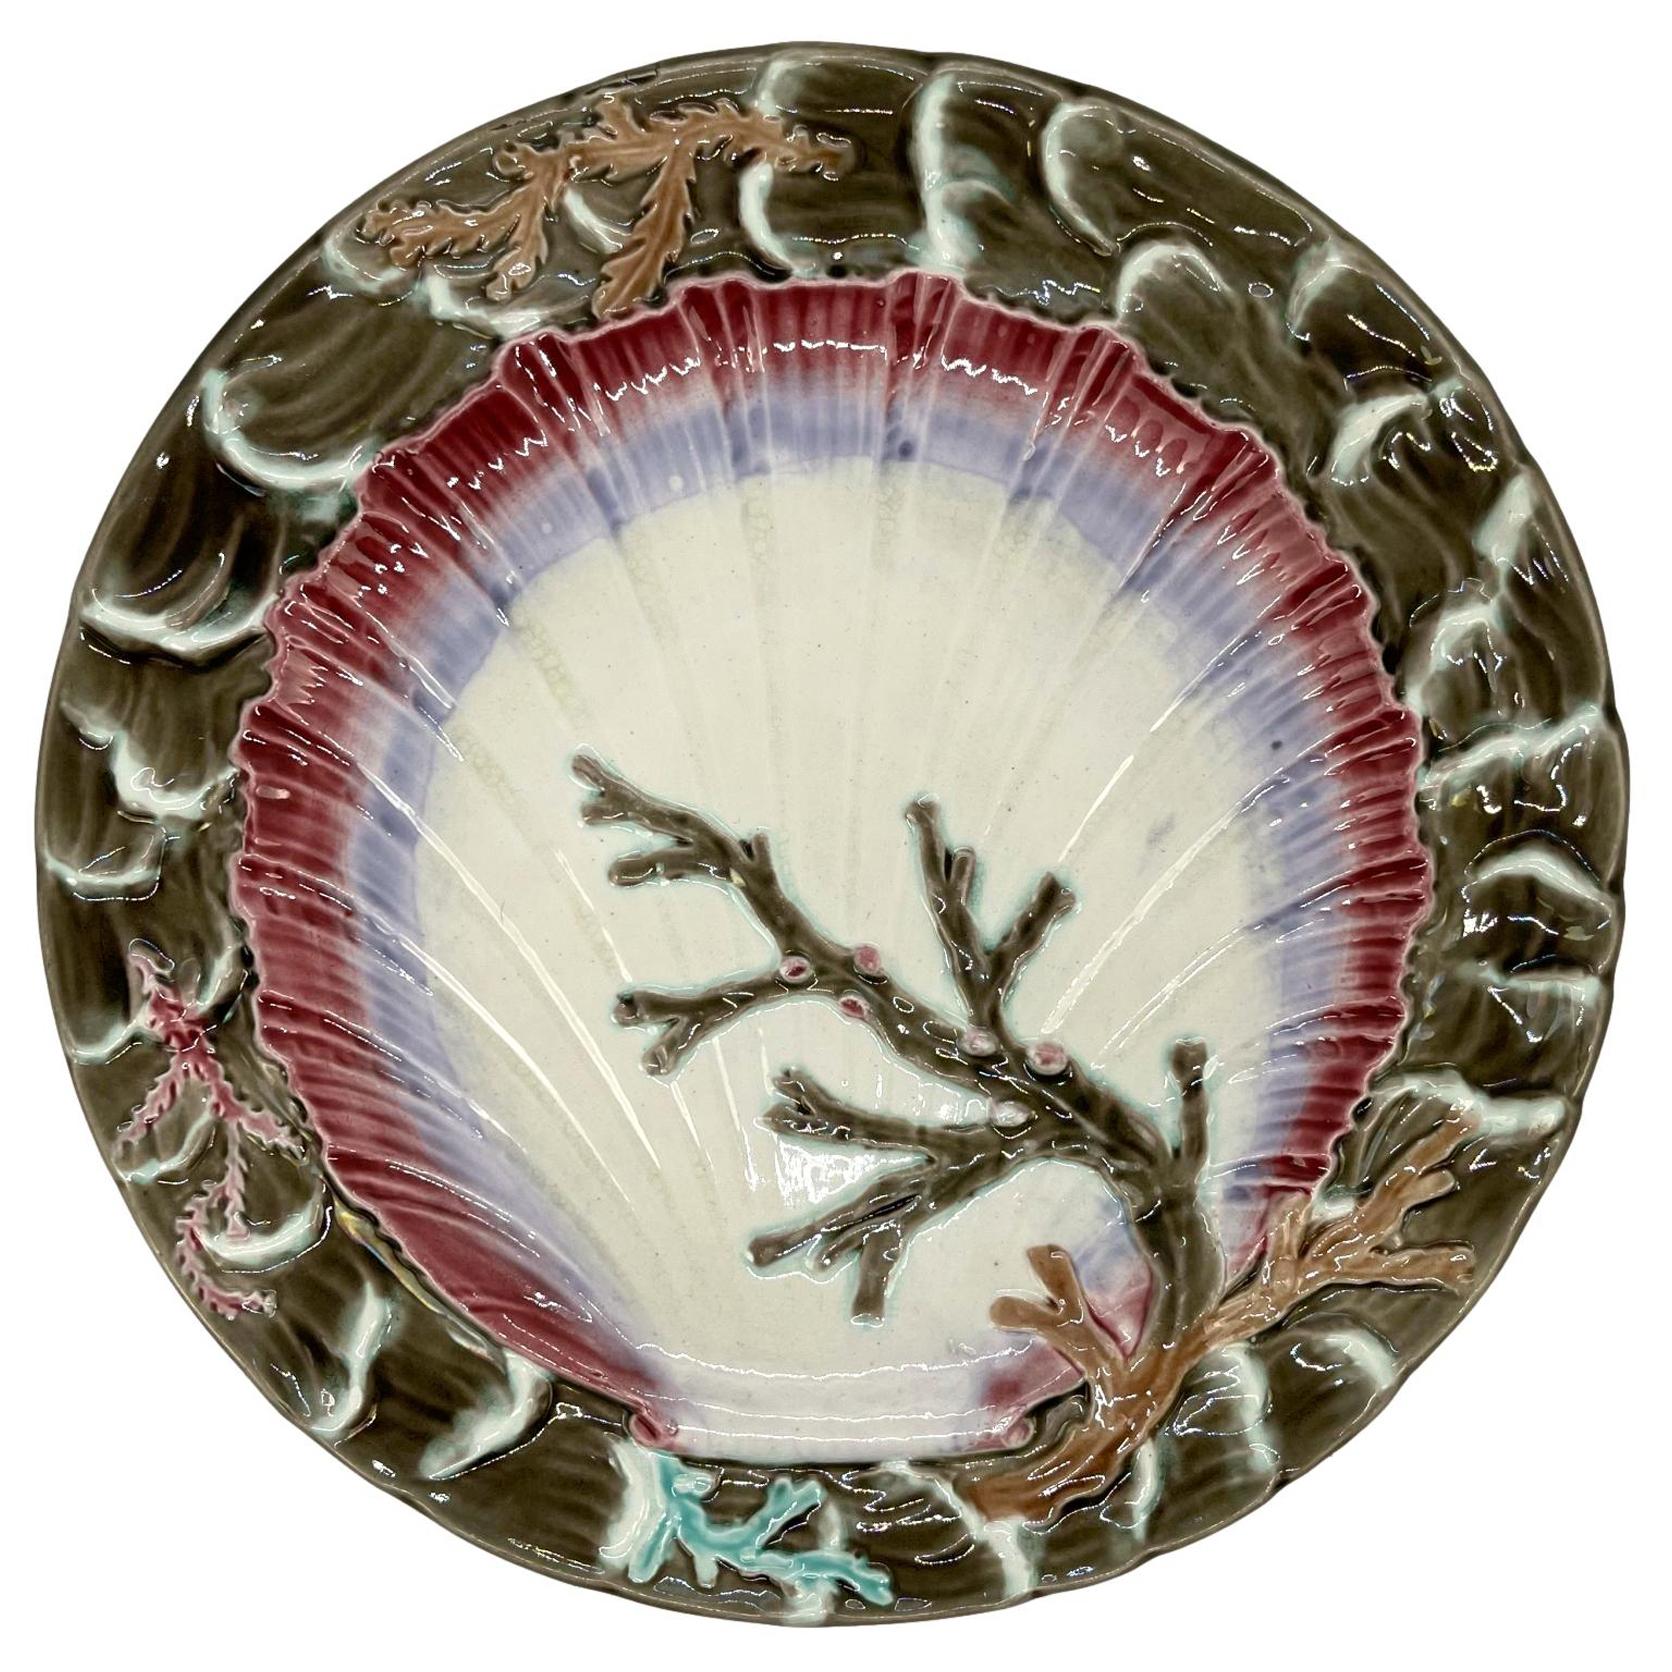 Wedgwood Majolica Ocean Plate, English, Dated 1877